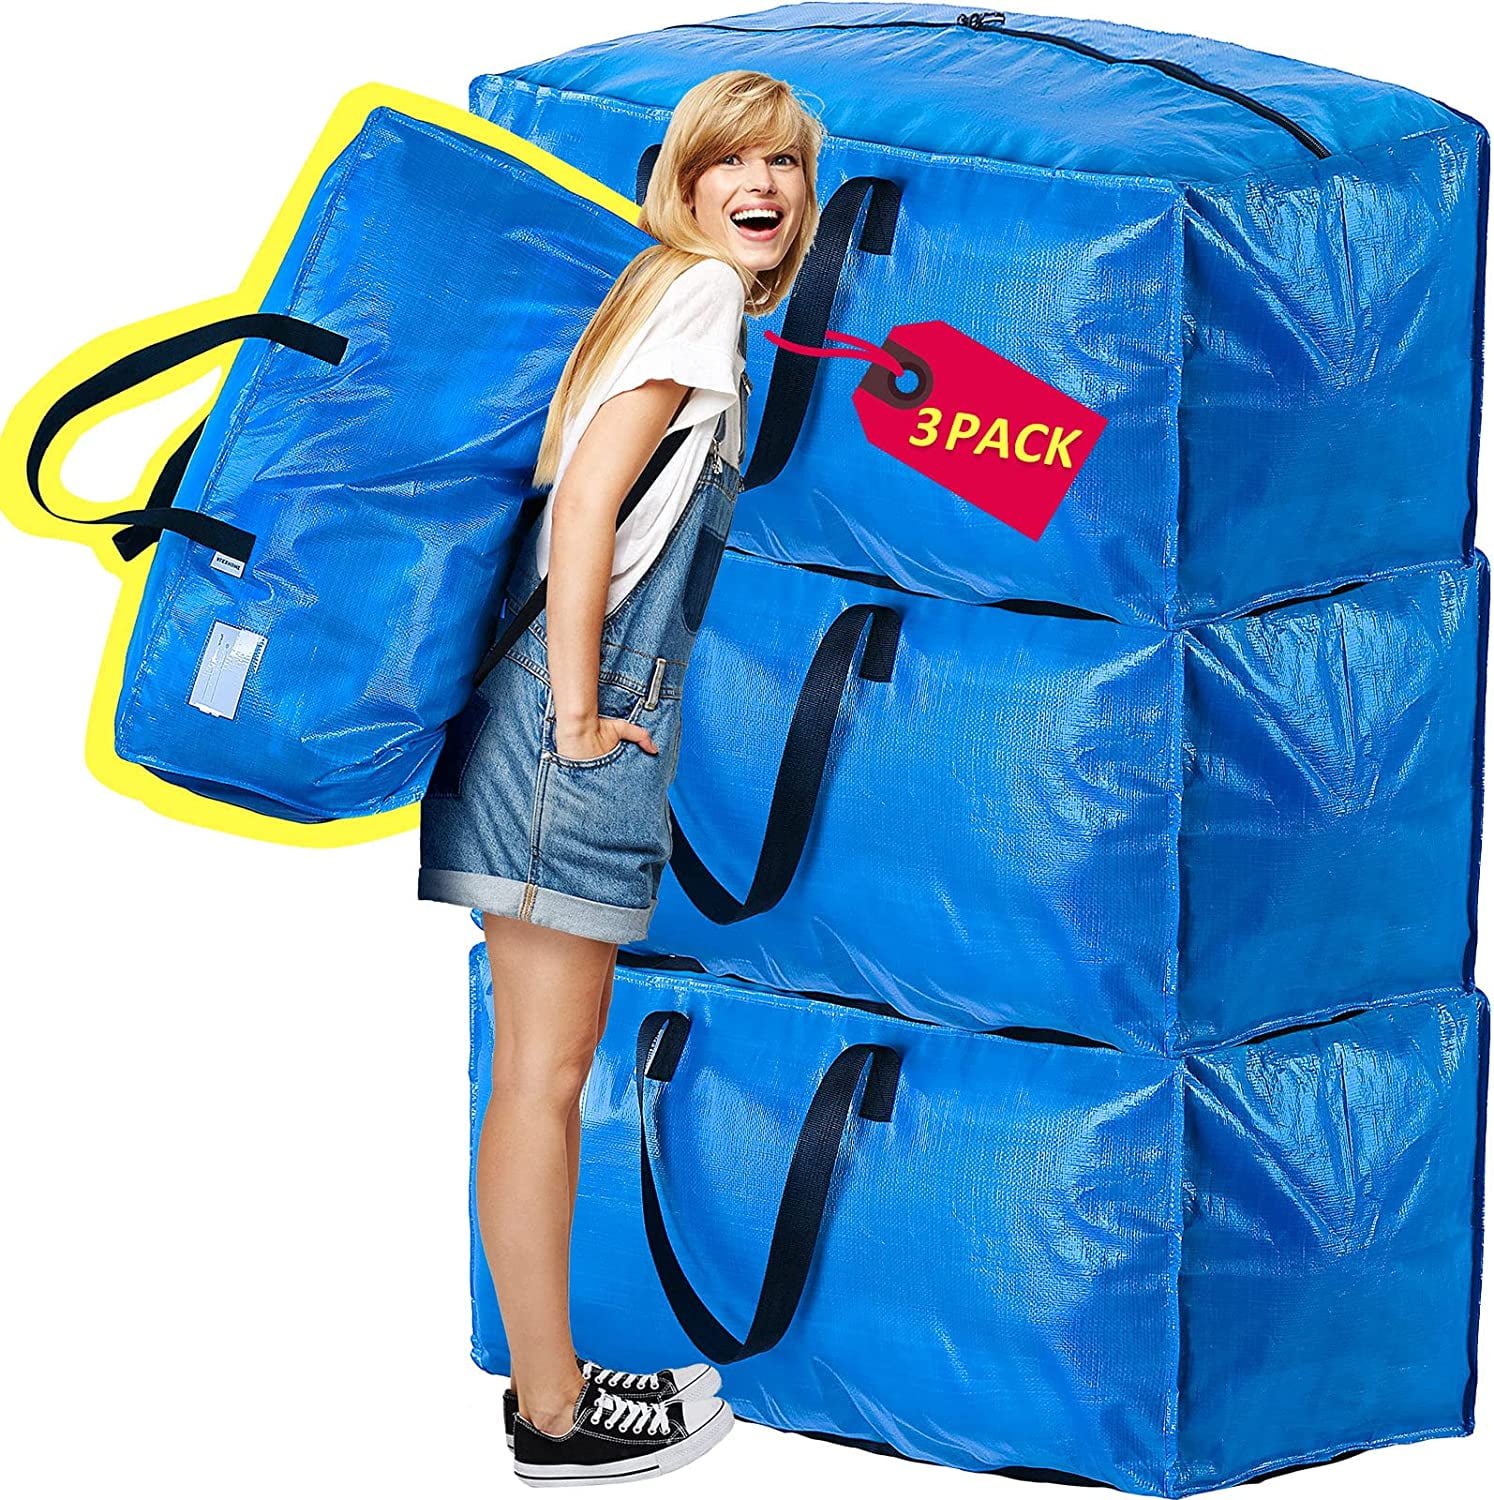 Large Capacity Heavy Duty Moving Bags (4-Pack, Gray & Blue) – SINGULAR  BASICS